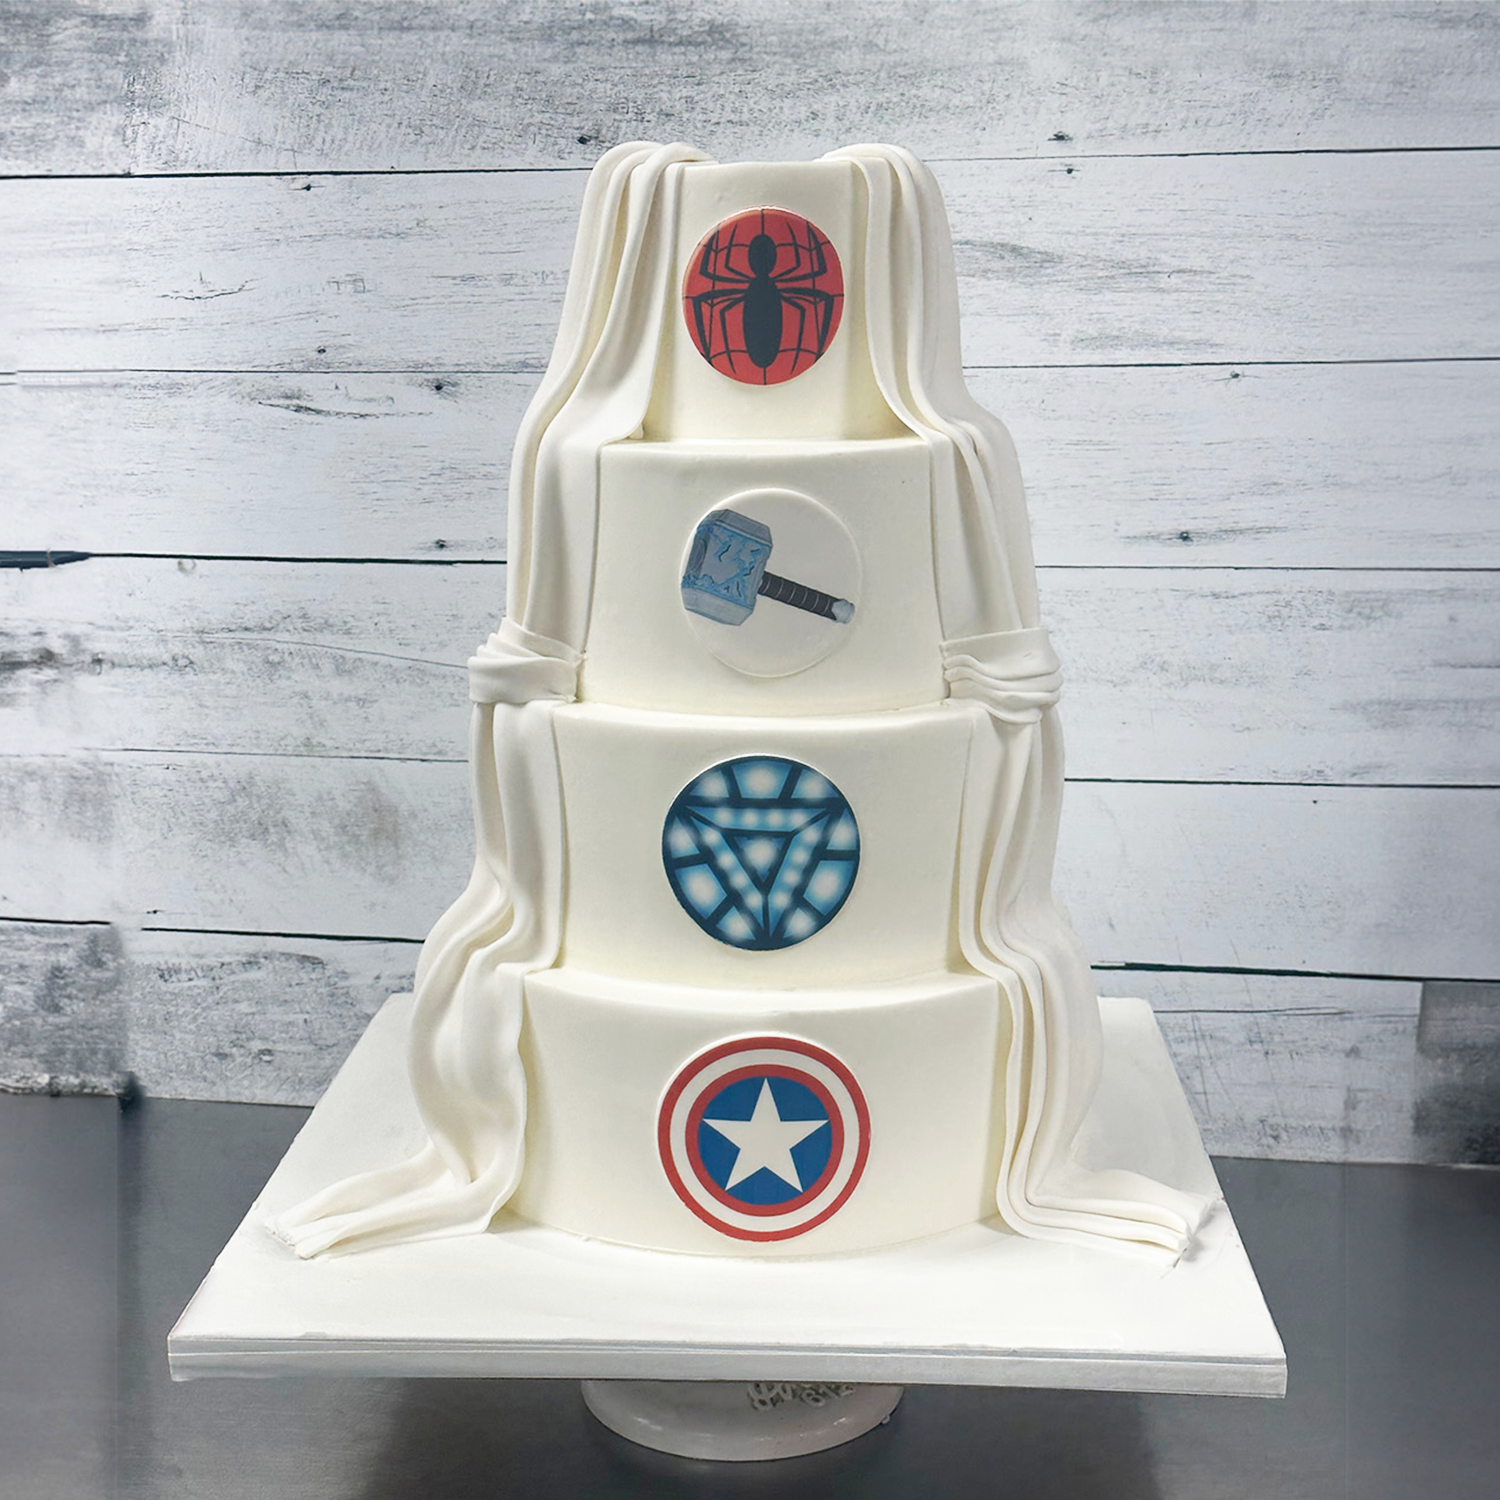 Superhero Wedding Cake